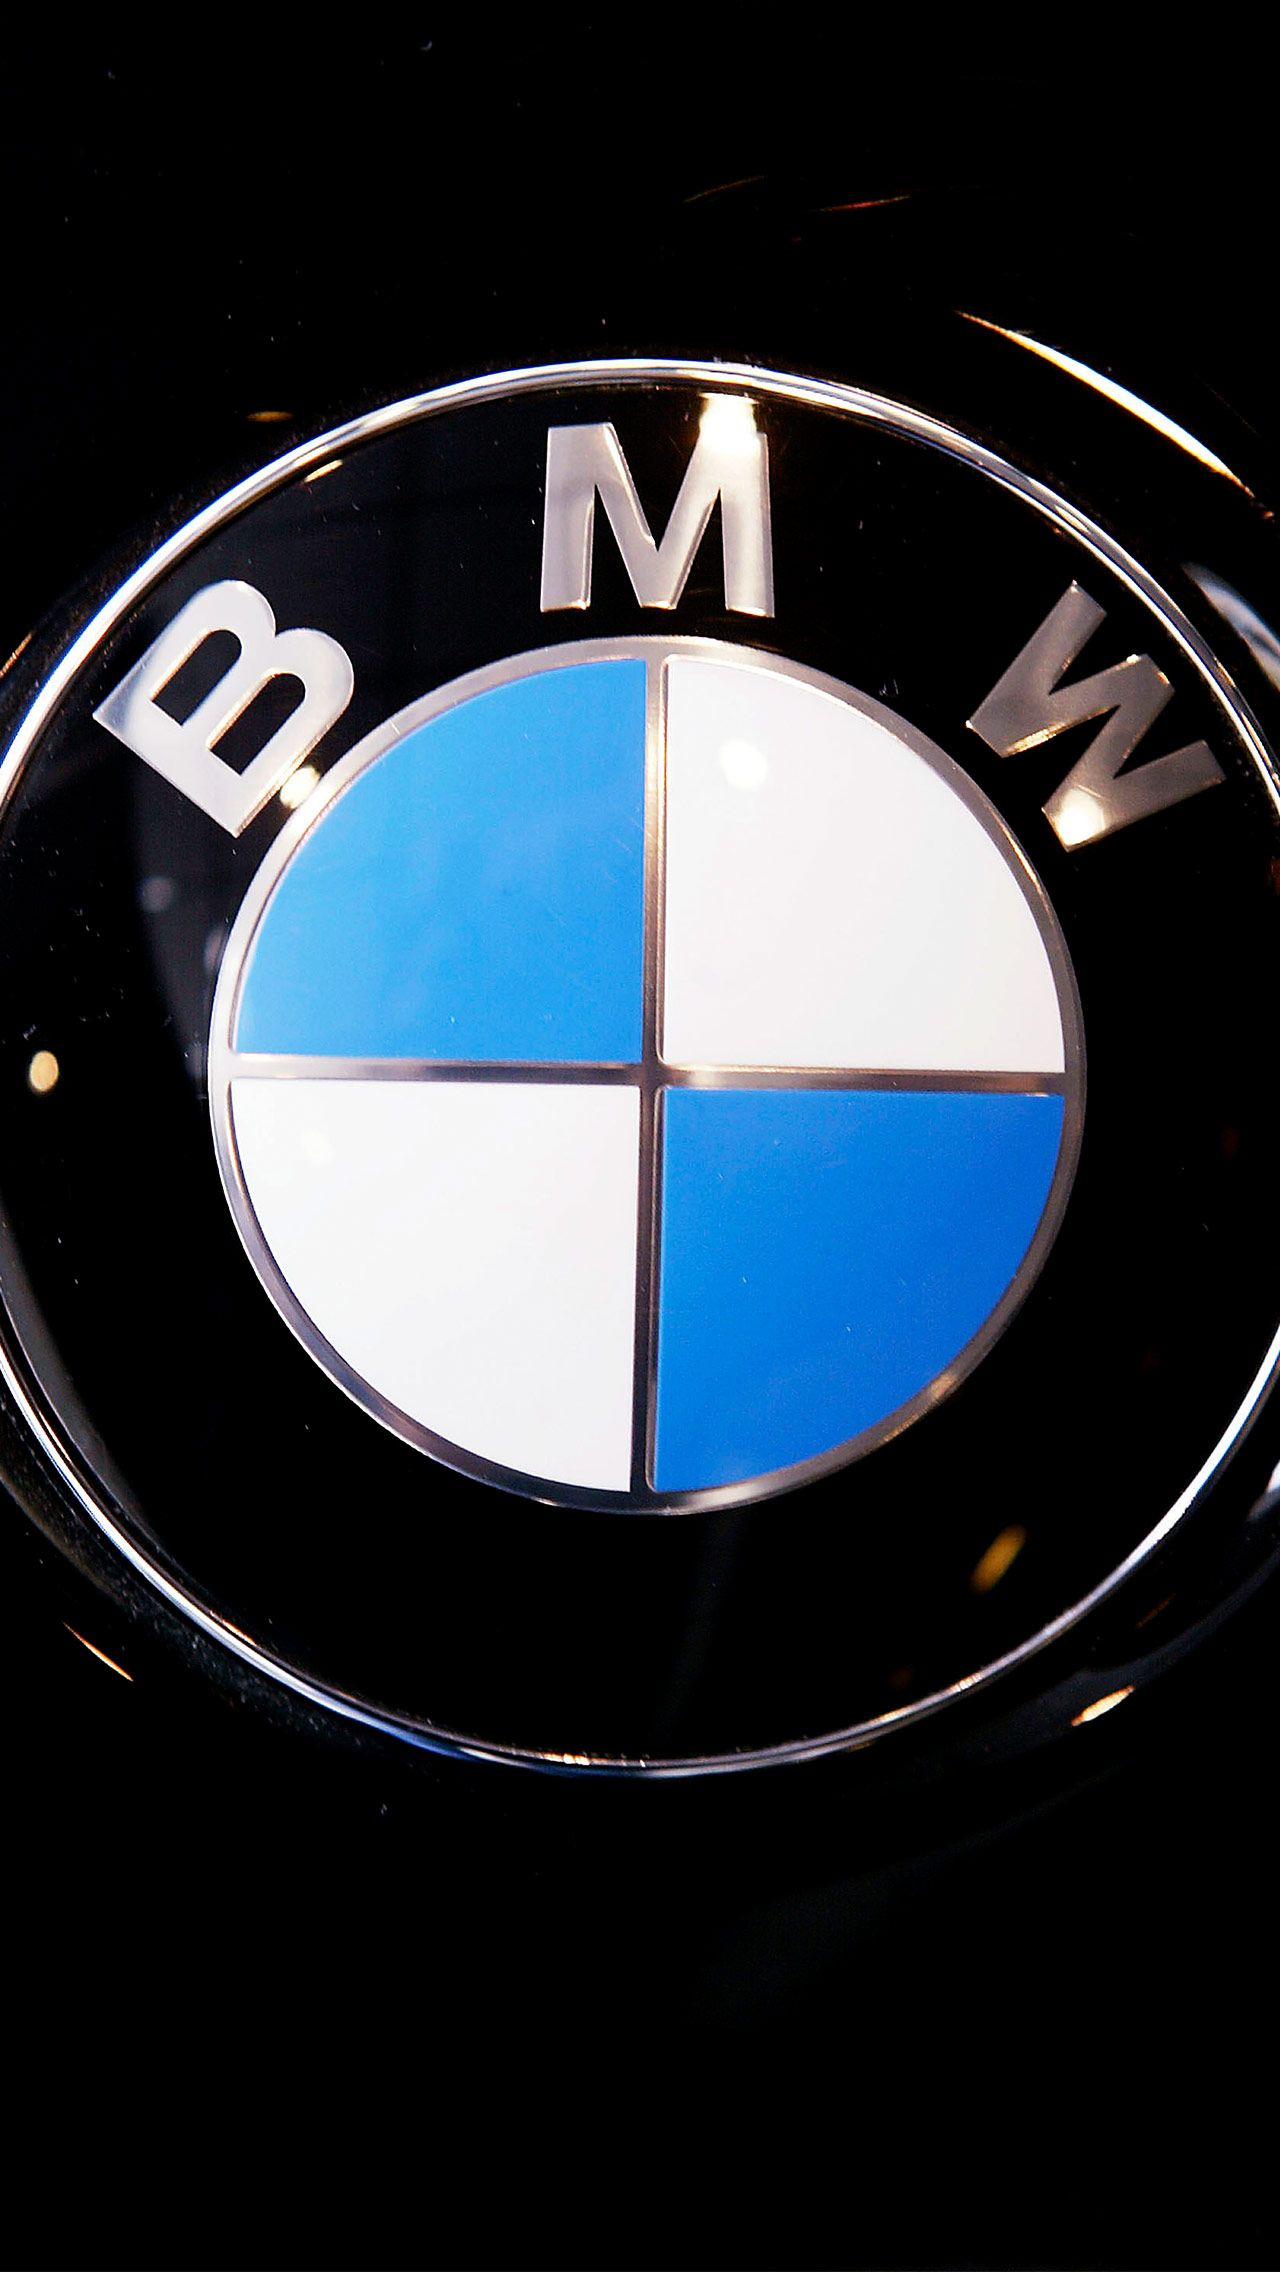 В 2008-м призёрам Олимпиады вручили внедорожники BMW. Девушки получили автомобили модели X3, мужчины – X5.